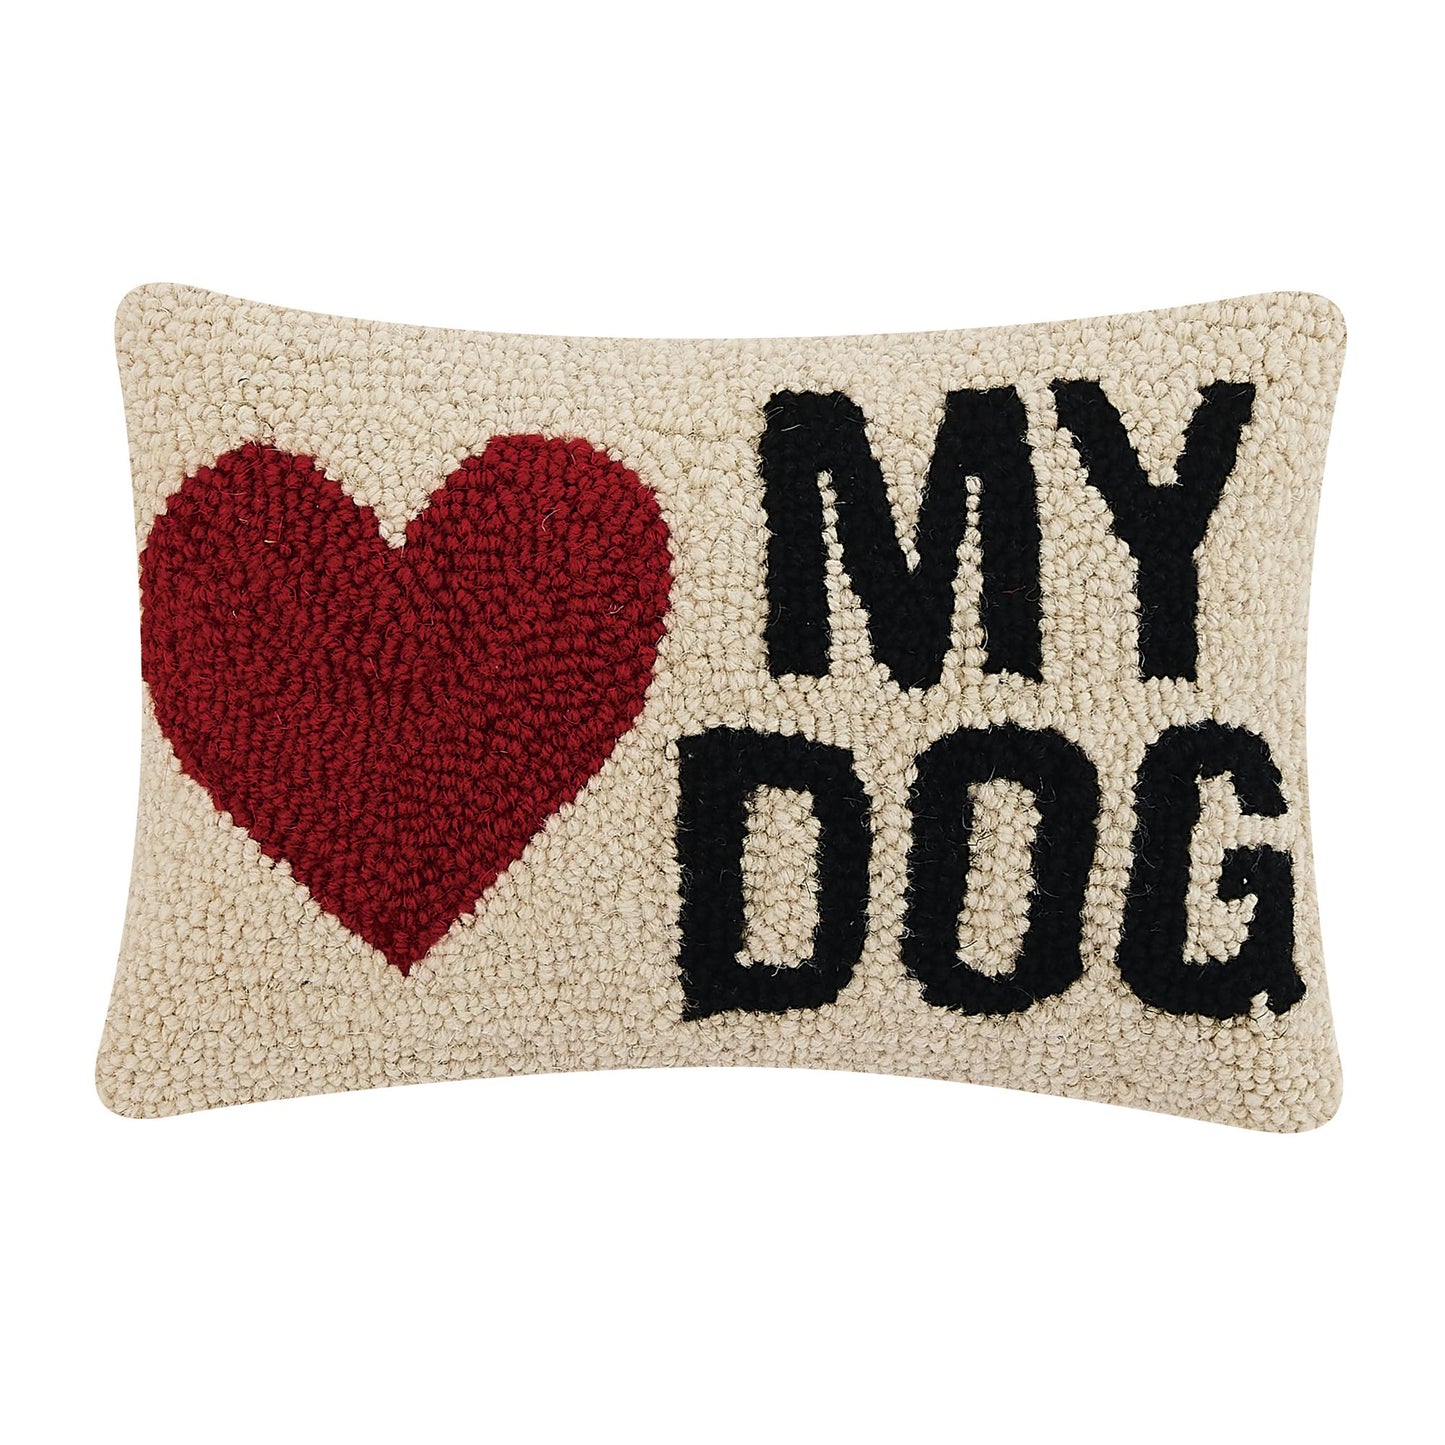 ❤️ (heart) My Dog Throw Pillow